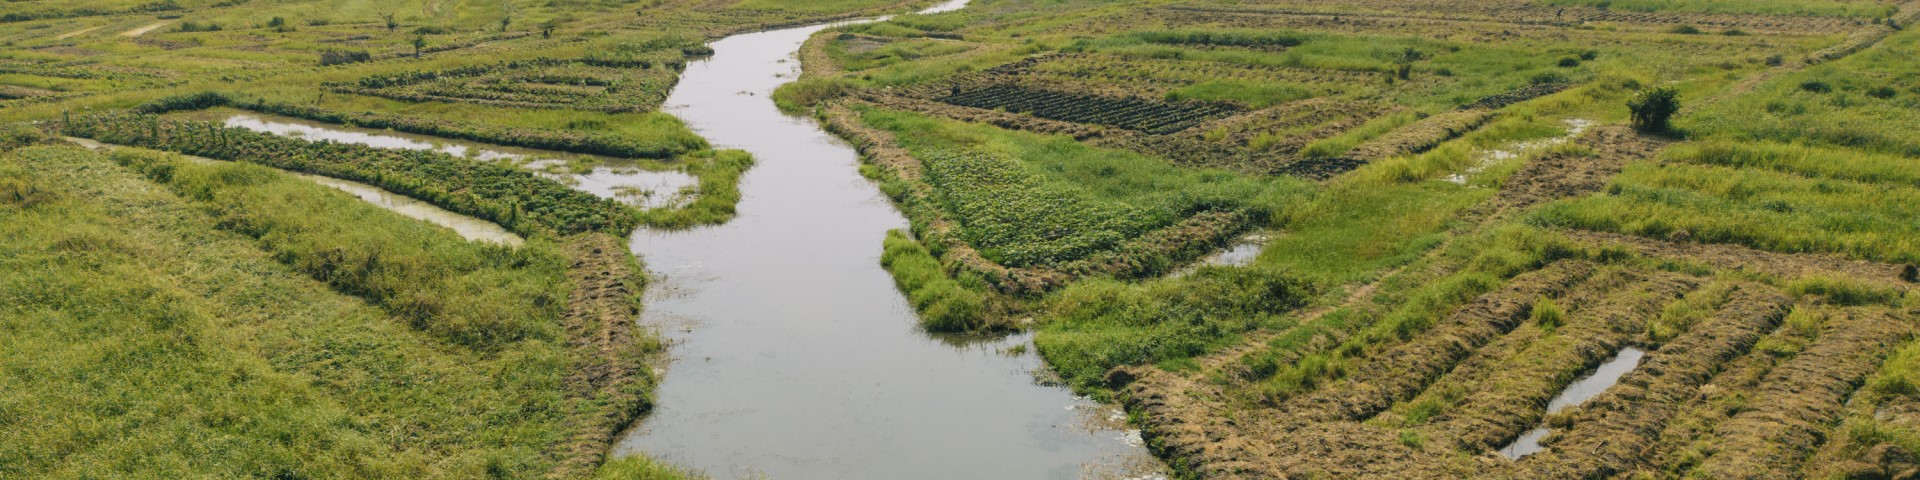 Le canal Hondji-Bembê serpente à travers le paysage.